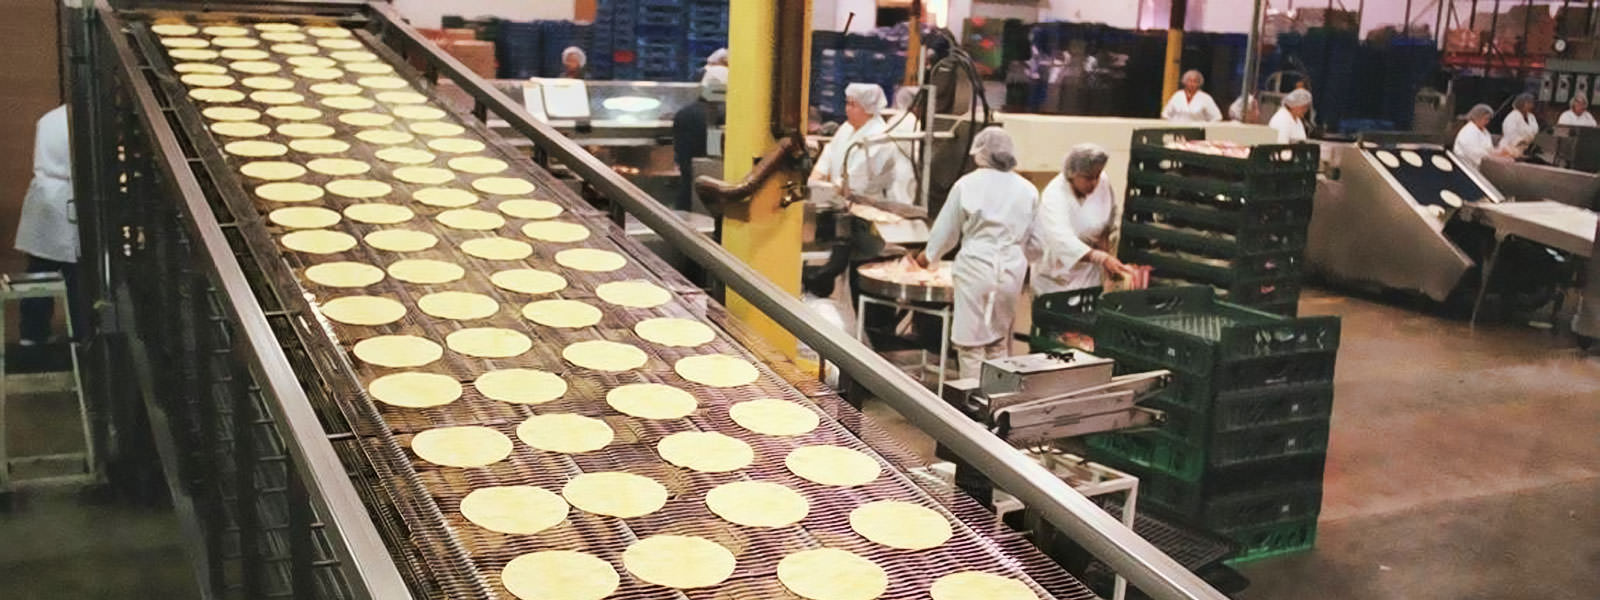 Elk Grove to get $25 million tortilla factory, 250 jobs